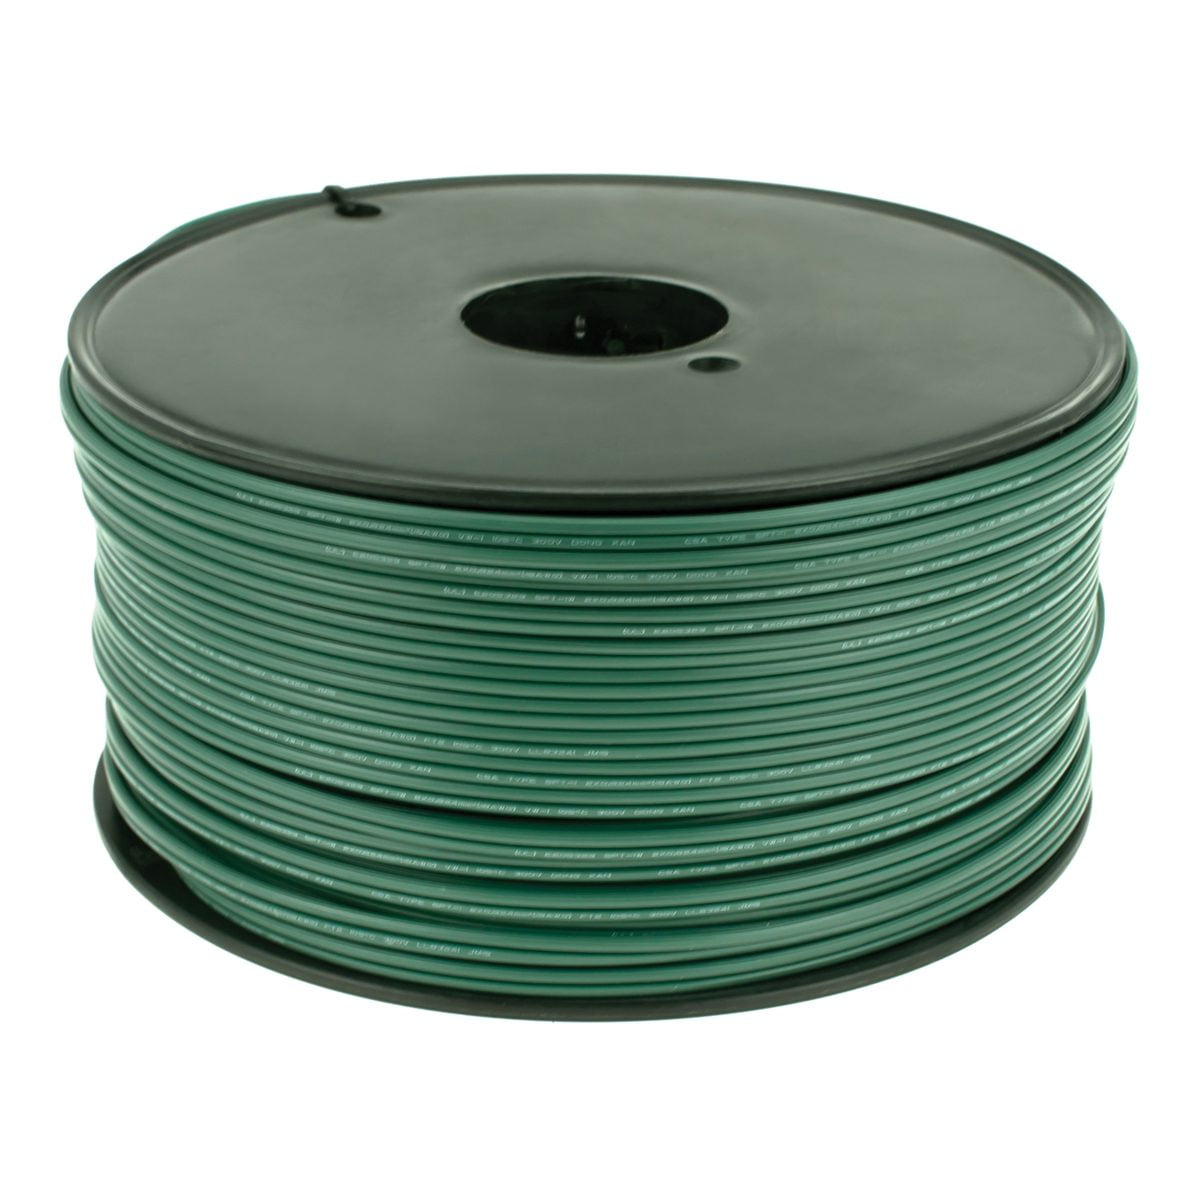 Green Zip Wire (Lamp Cord) – SPT-1 – 250′ Reel (No Sockets/Plugs)